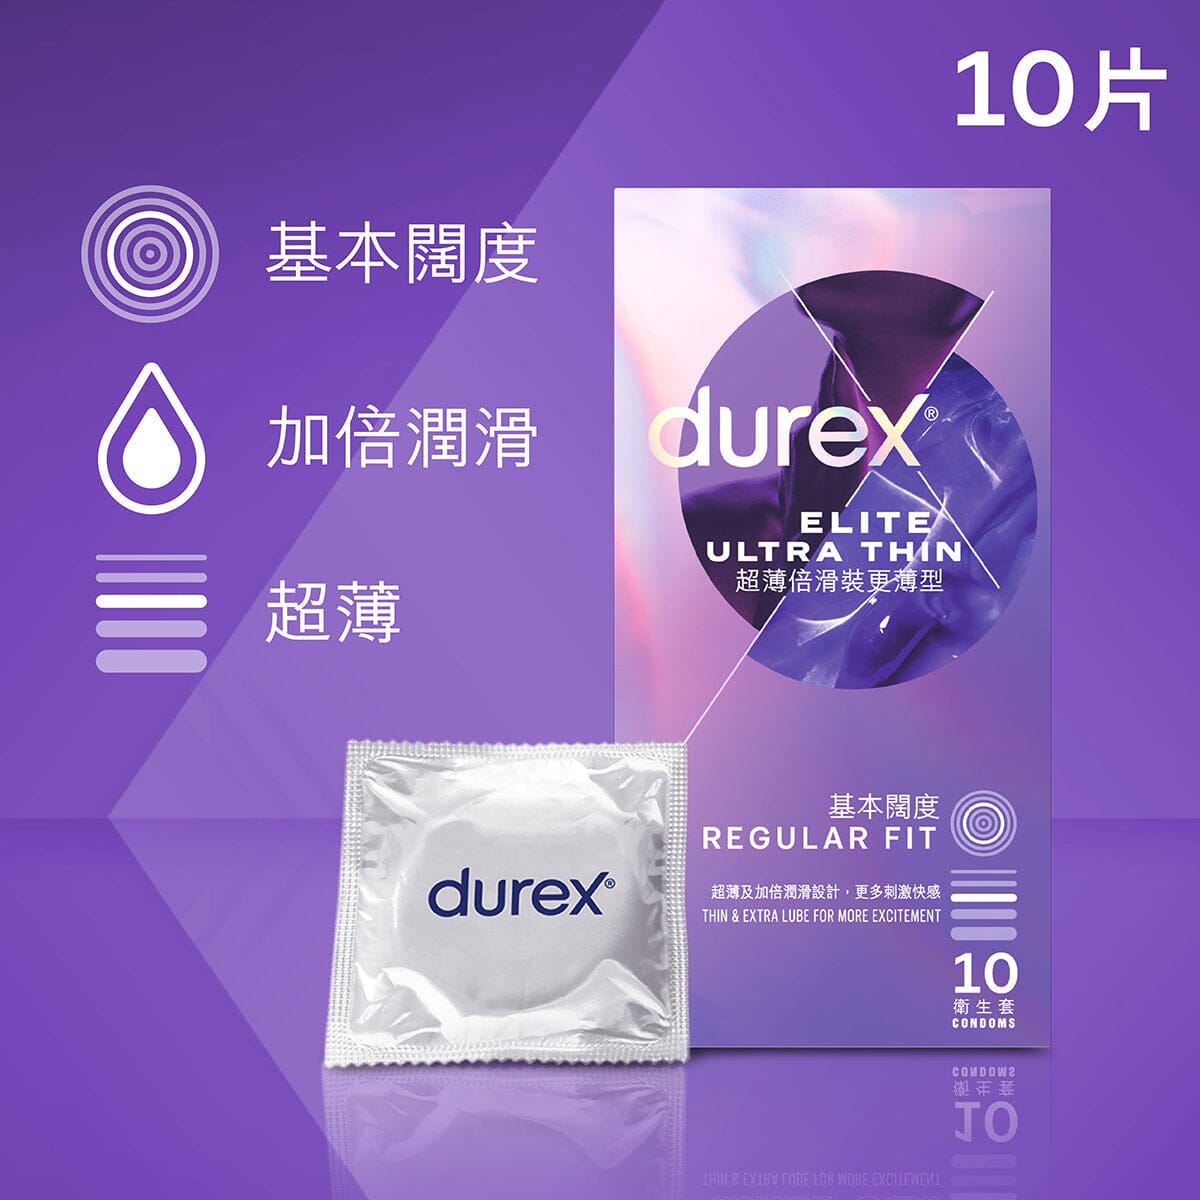 DUREX 超薄倍滑裝更薄型安全套 10 片裝 購買